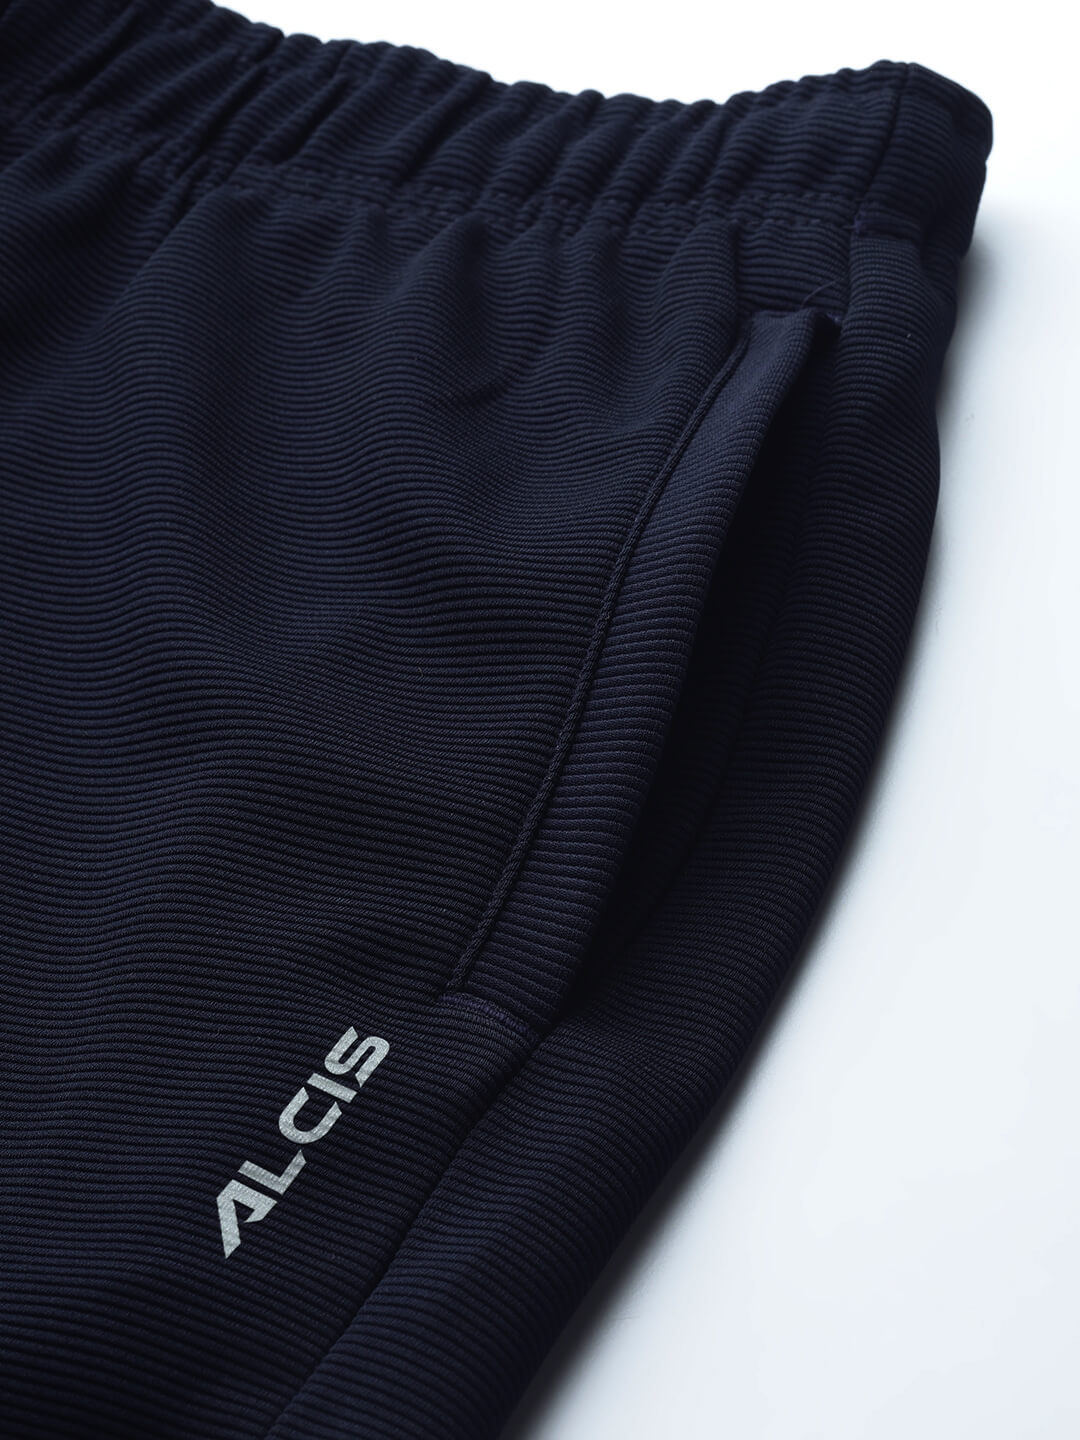 Alcis Men Navy Blue Slim Fit Drytech+ Training or Gym Sports Shorts